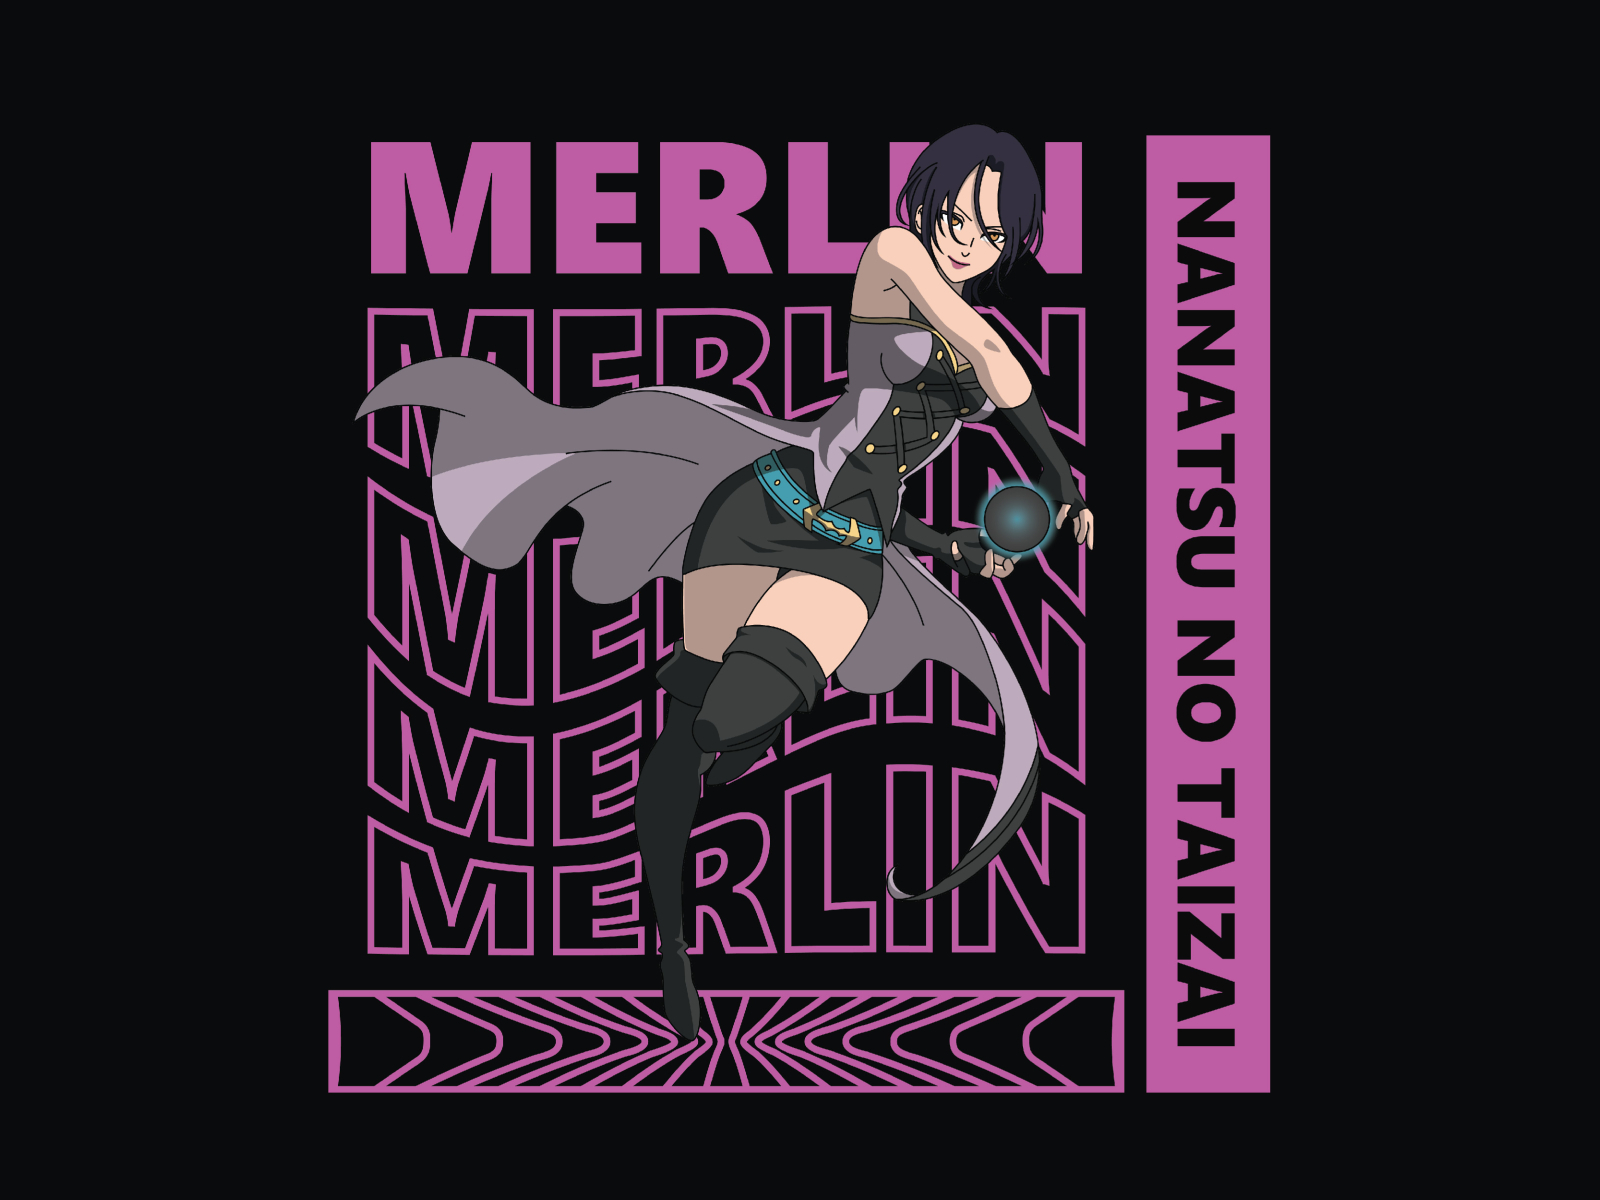 merlinseven Deadly Sins  Merlin Seven Deadly Sins Characters HD Png  Download  Transparent Png Image  PNGitem